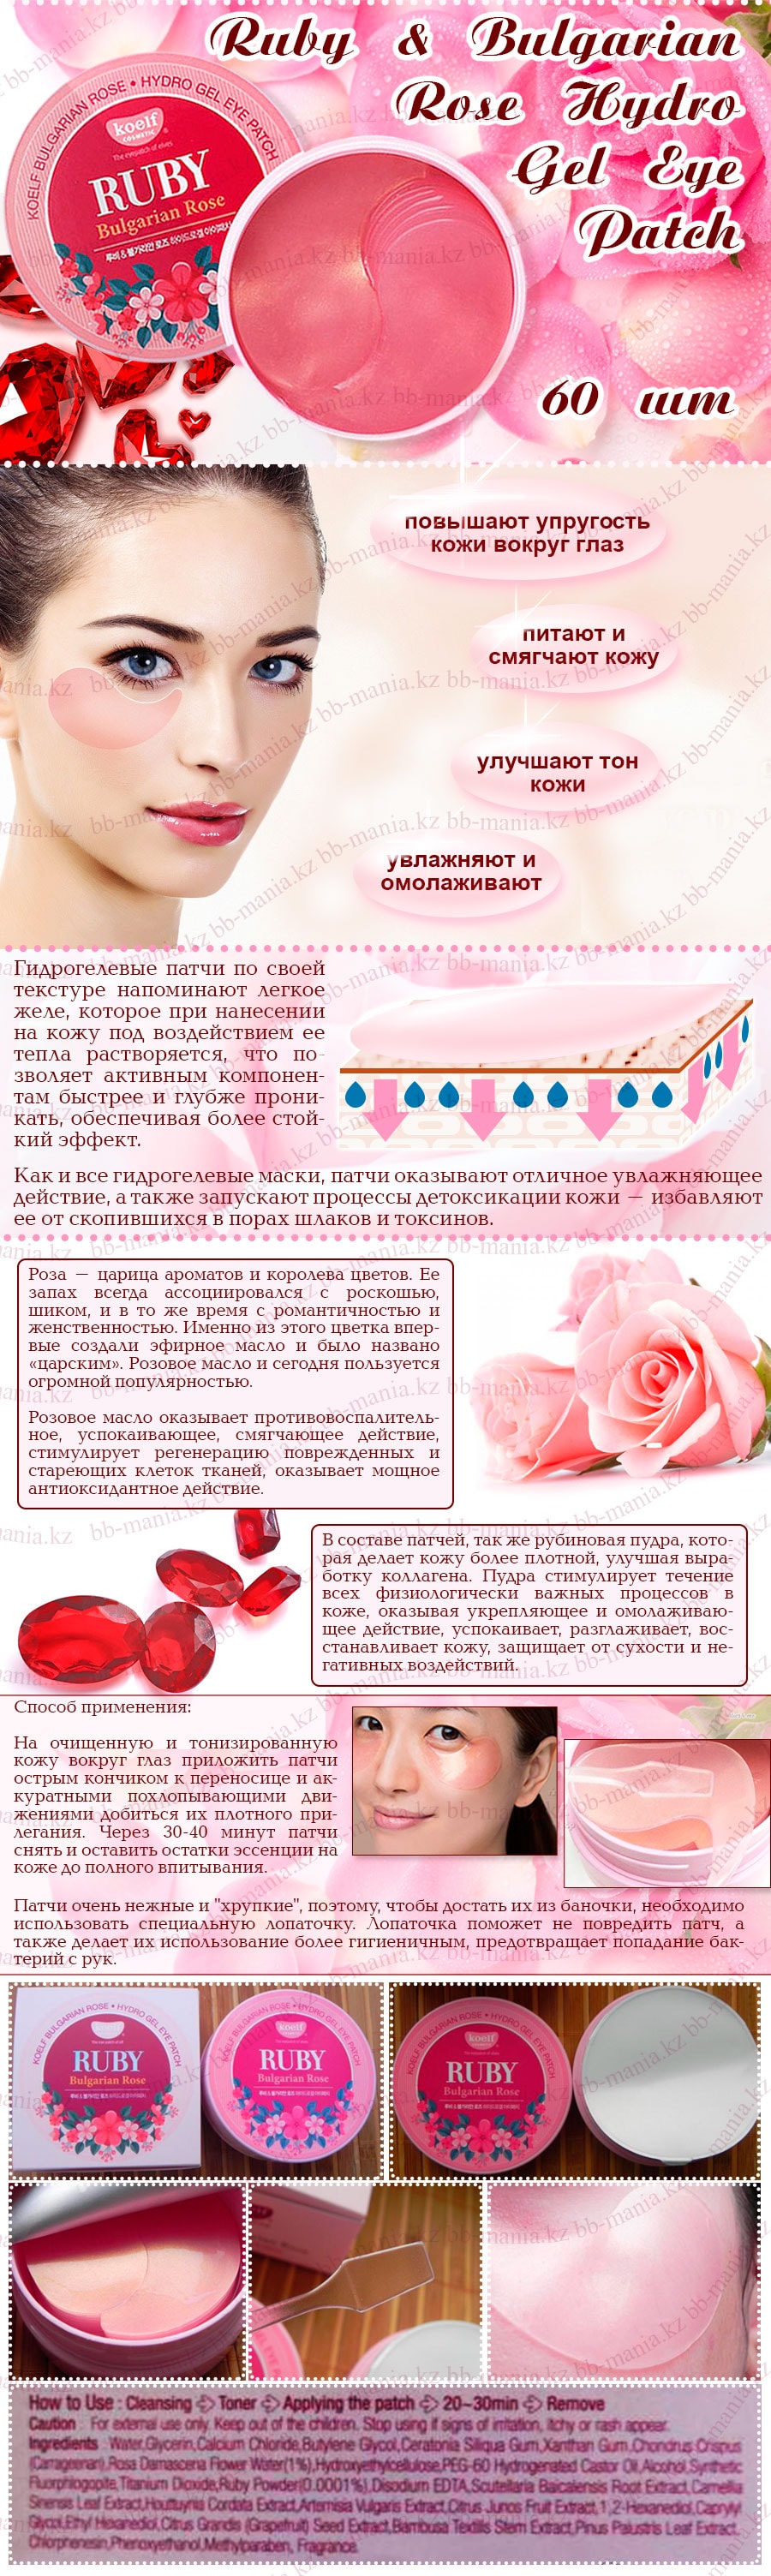 Ruby-&-Bulgarian-Rose-Hydro-Gel-Eye-Patch-[Petitfee]-min